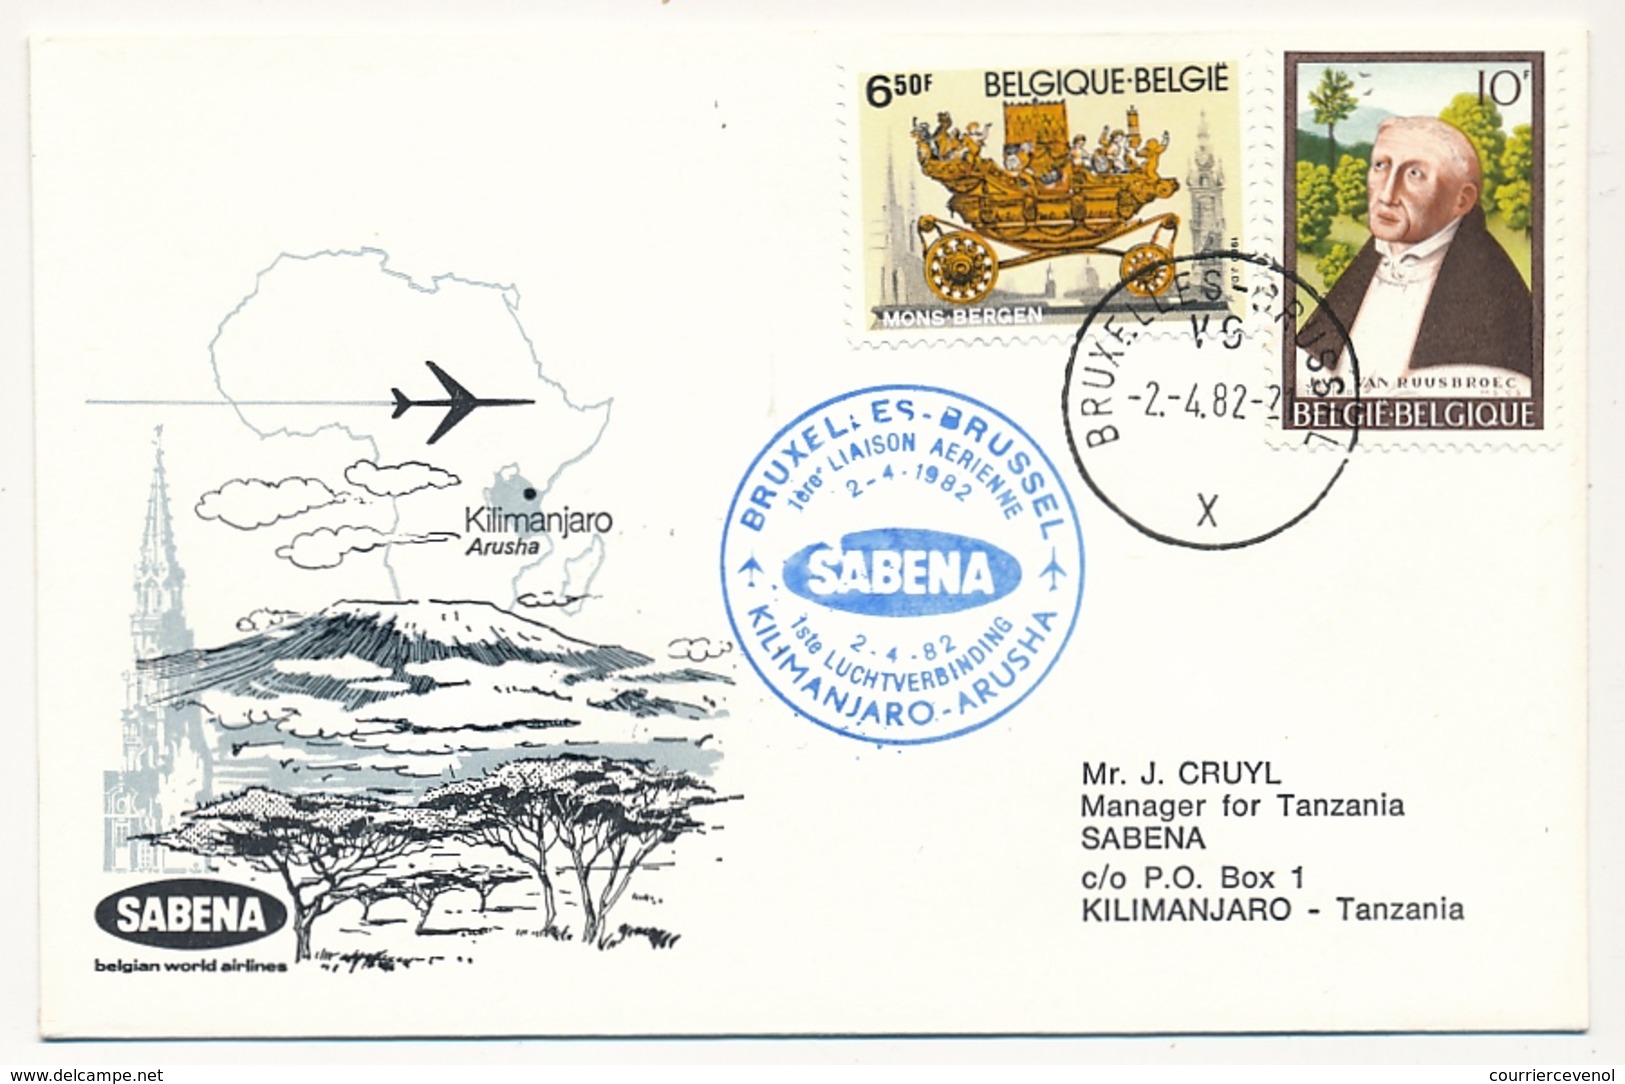 TANZANIE / BELGIQUE - 2 Enveloppes SABENA - 1ere Liaison Aérienne - KILIMANJARO / BRUXELLES Retour 3/4/1982 Et 2/4/1982 - Tanzanie (1964-...)